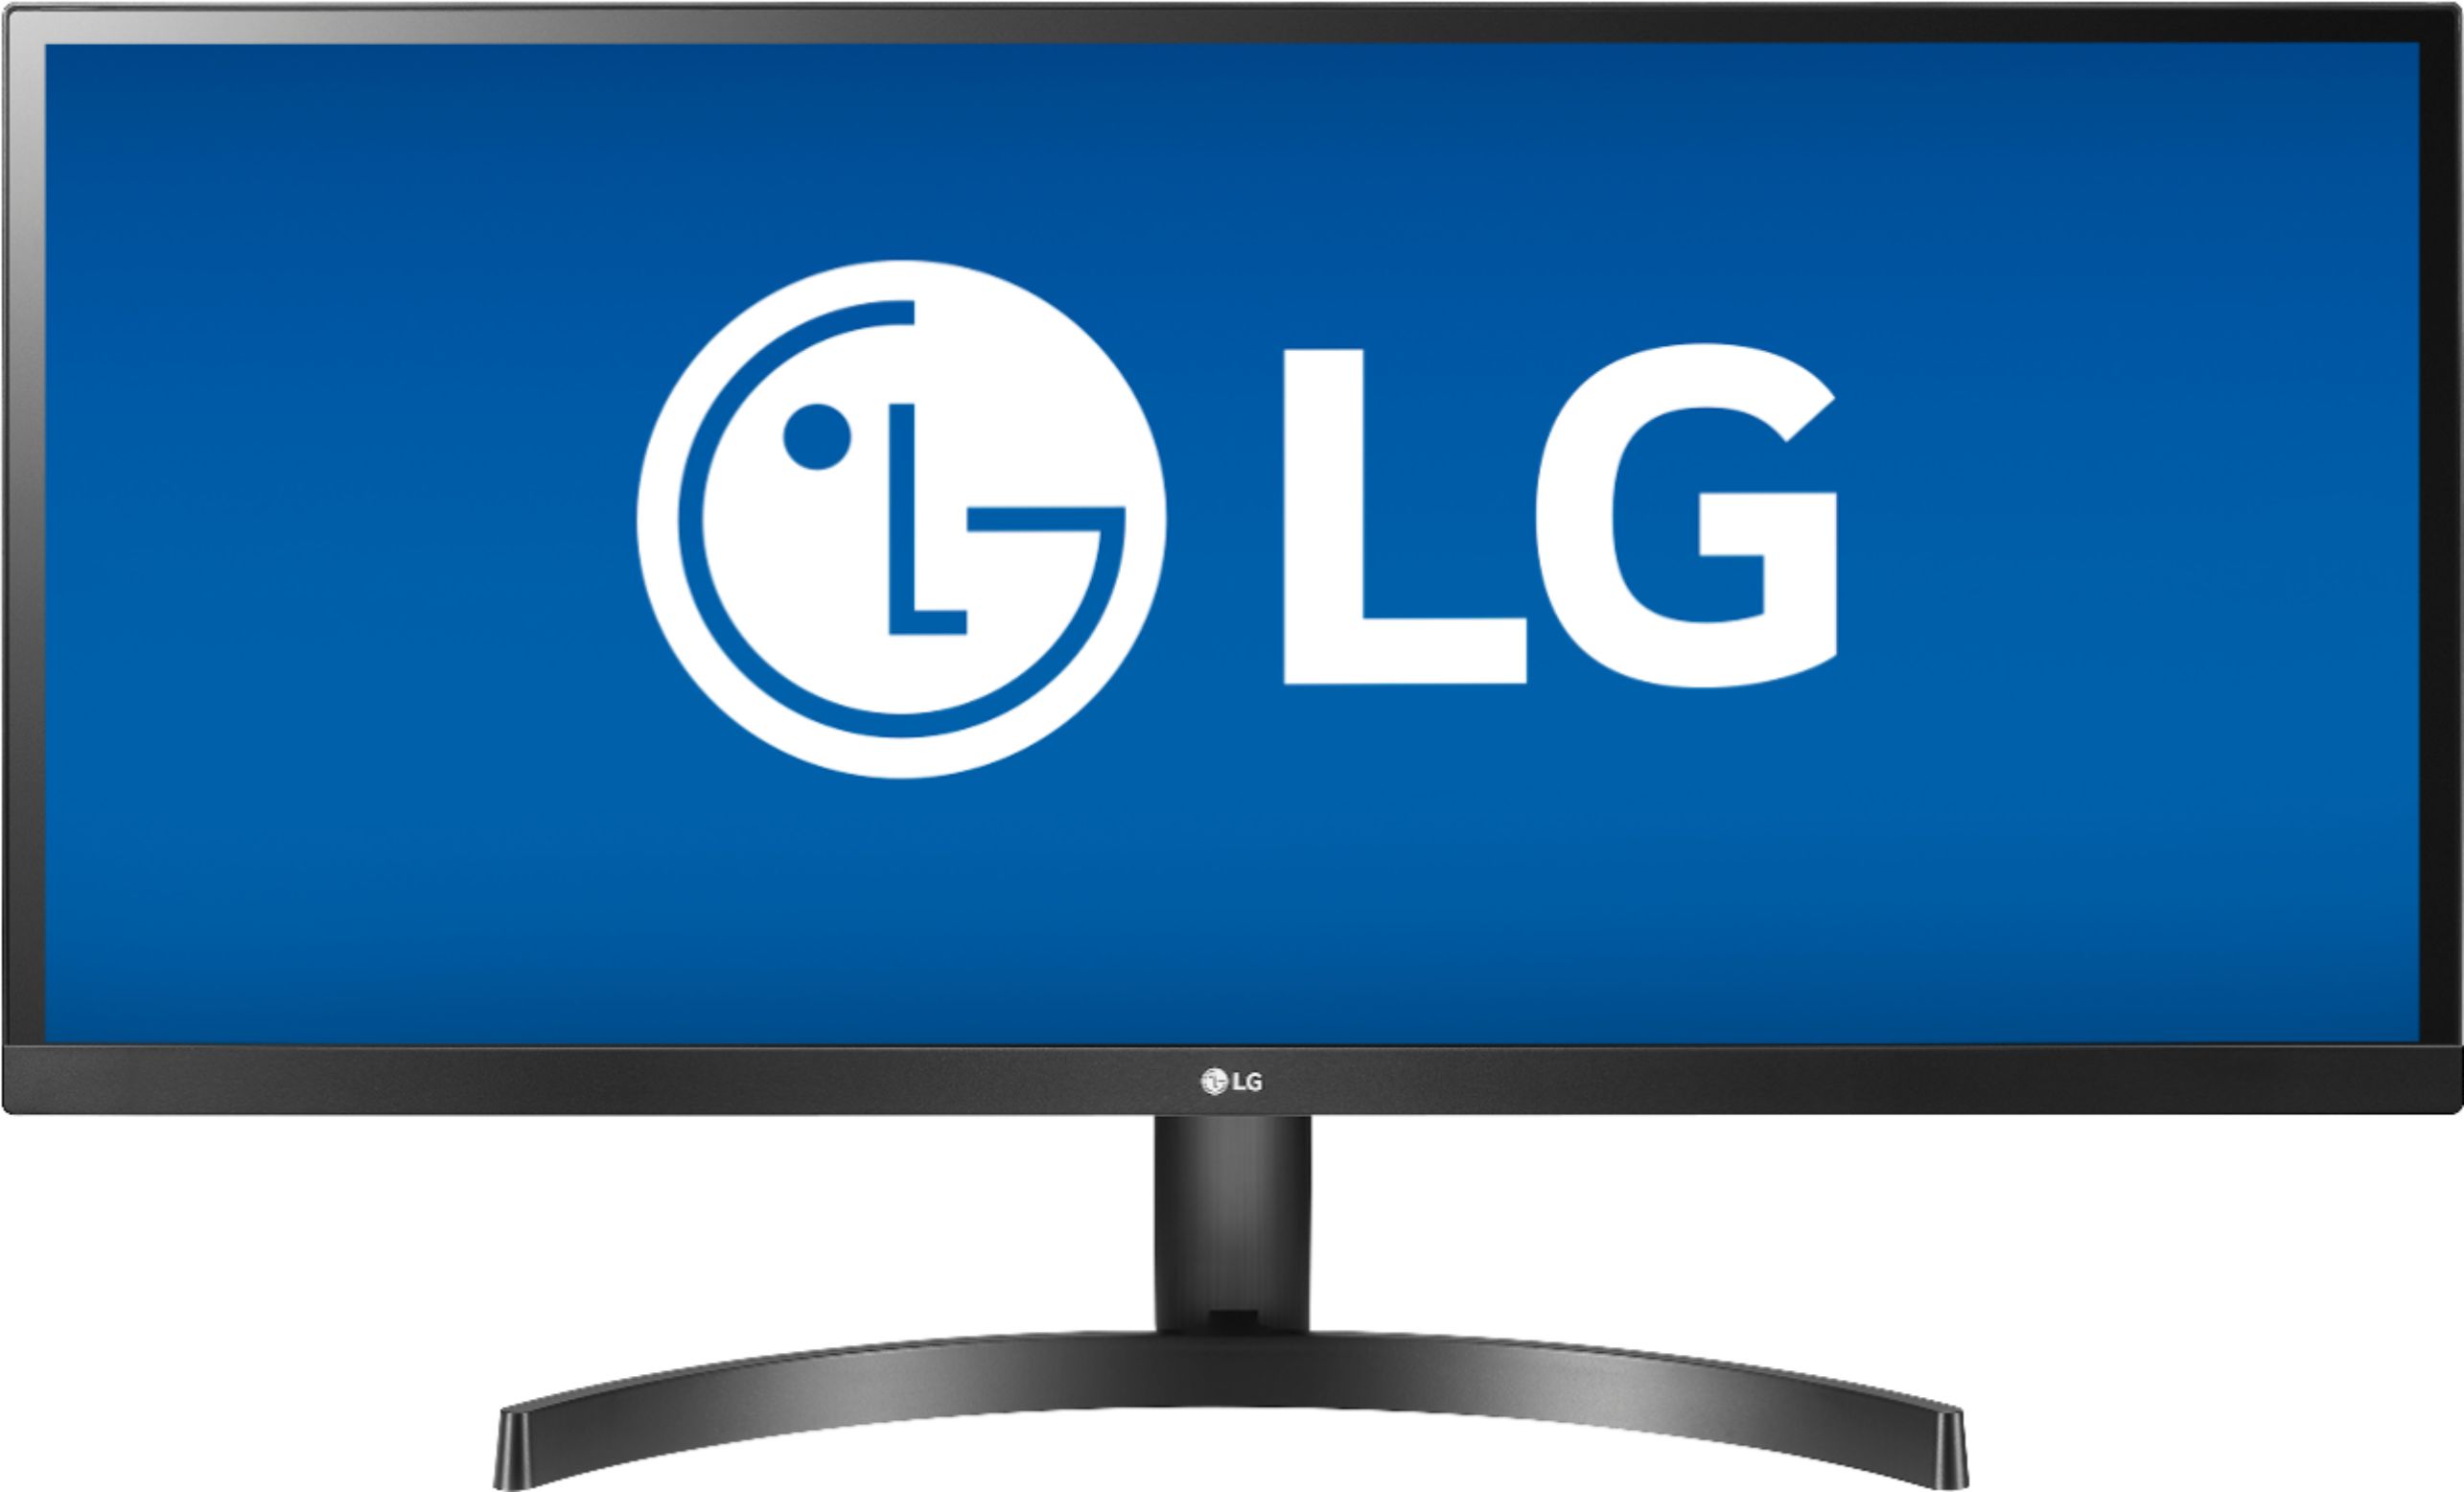 Lg screen split software